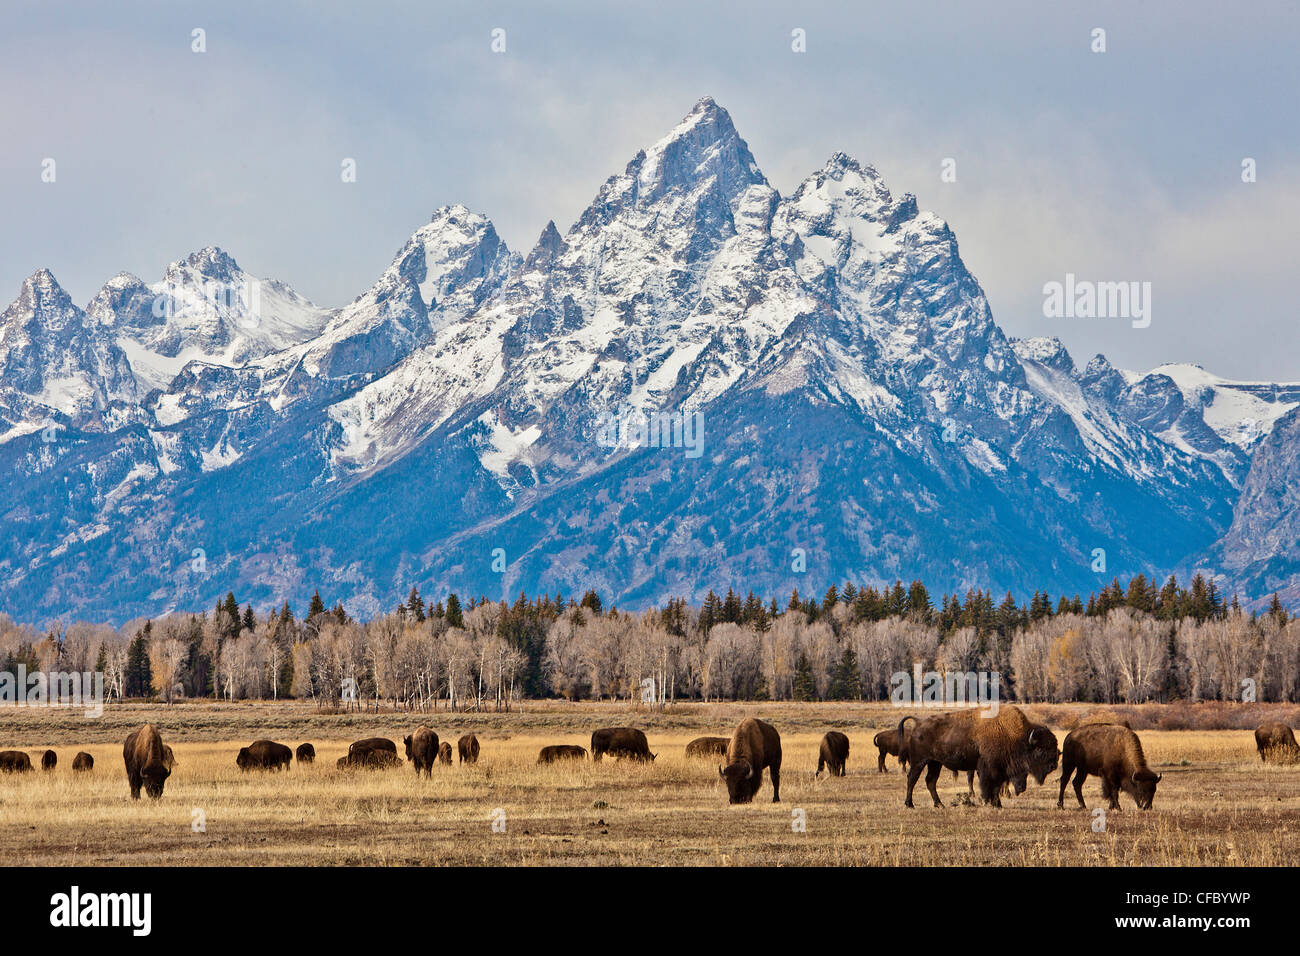 Stati Uniti d'America, Stati Uniti, America, Wyoming Grand Teton National Park, bufali, animali, enorme, montagne, parco, pascoli, fiume, neve Foto Stock